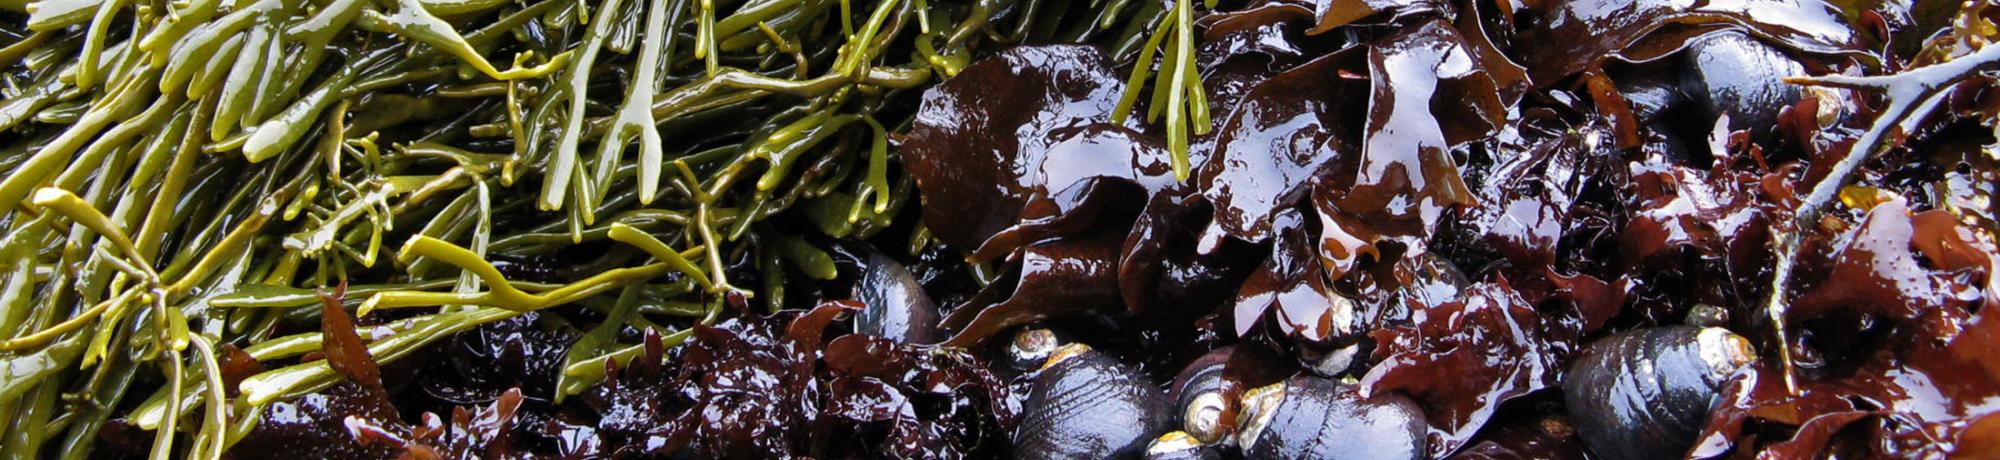 snails and algae, Photo Credit: Emily Jones